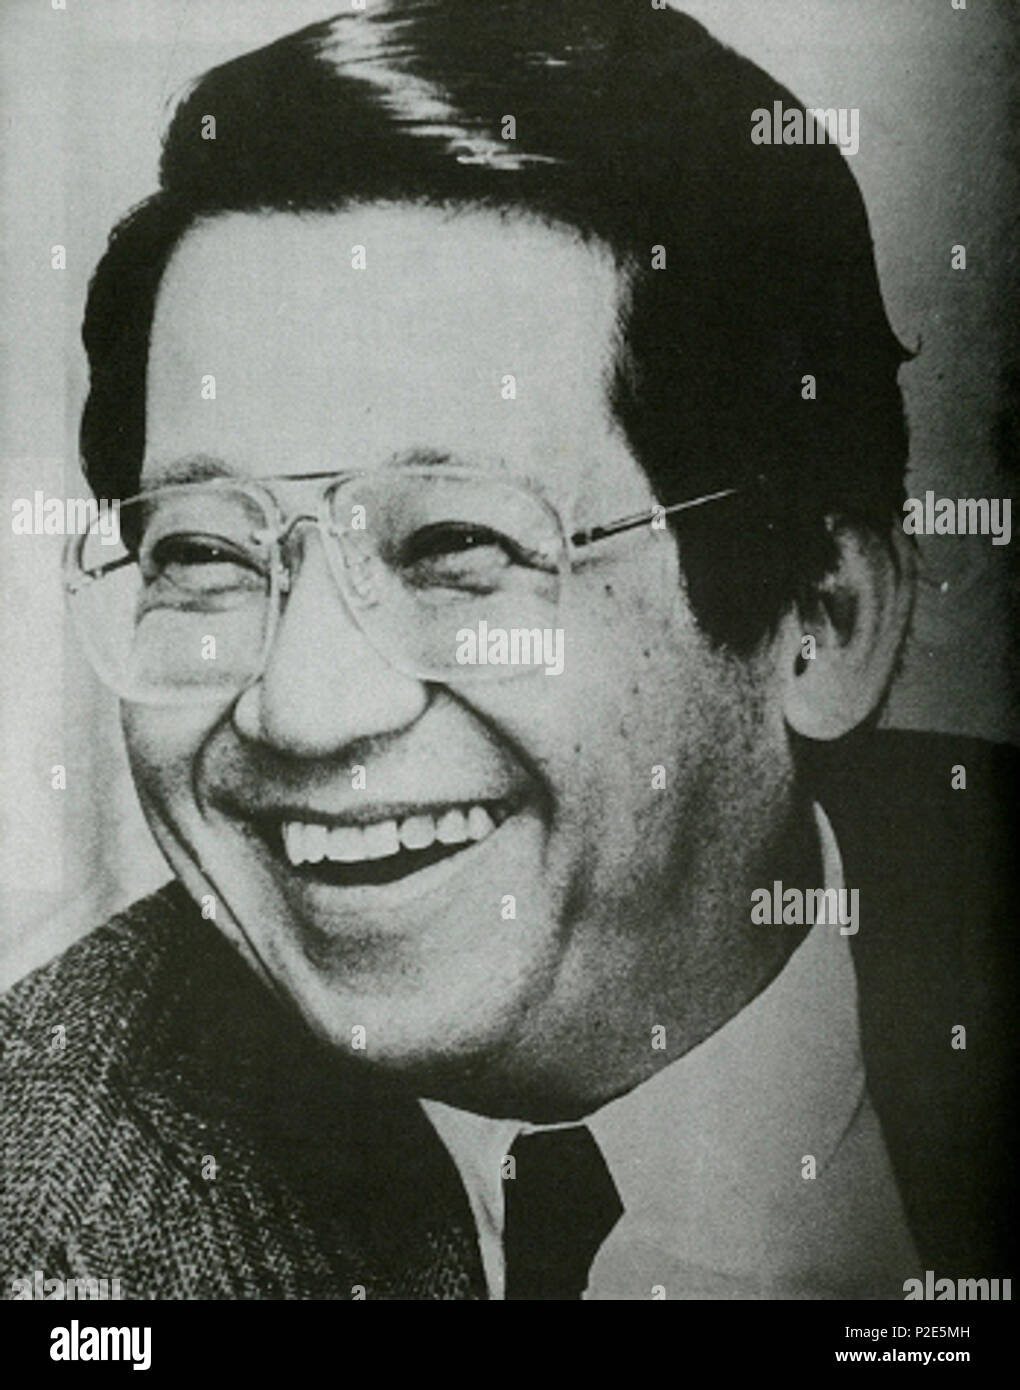 Benigno Ninoy Aquino High Resolution Stock Photography And Images Alamy